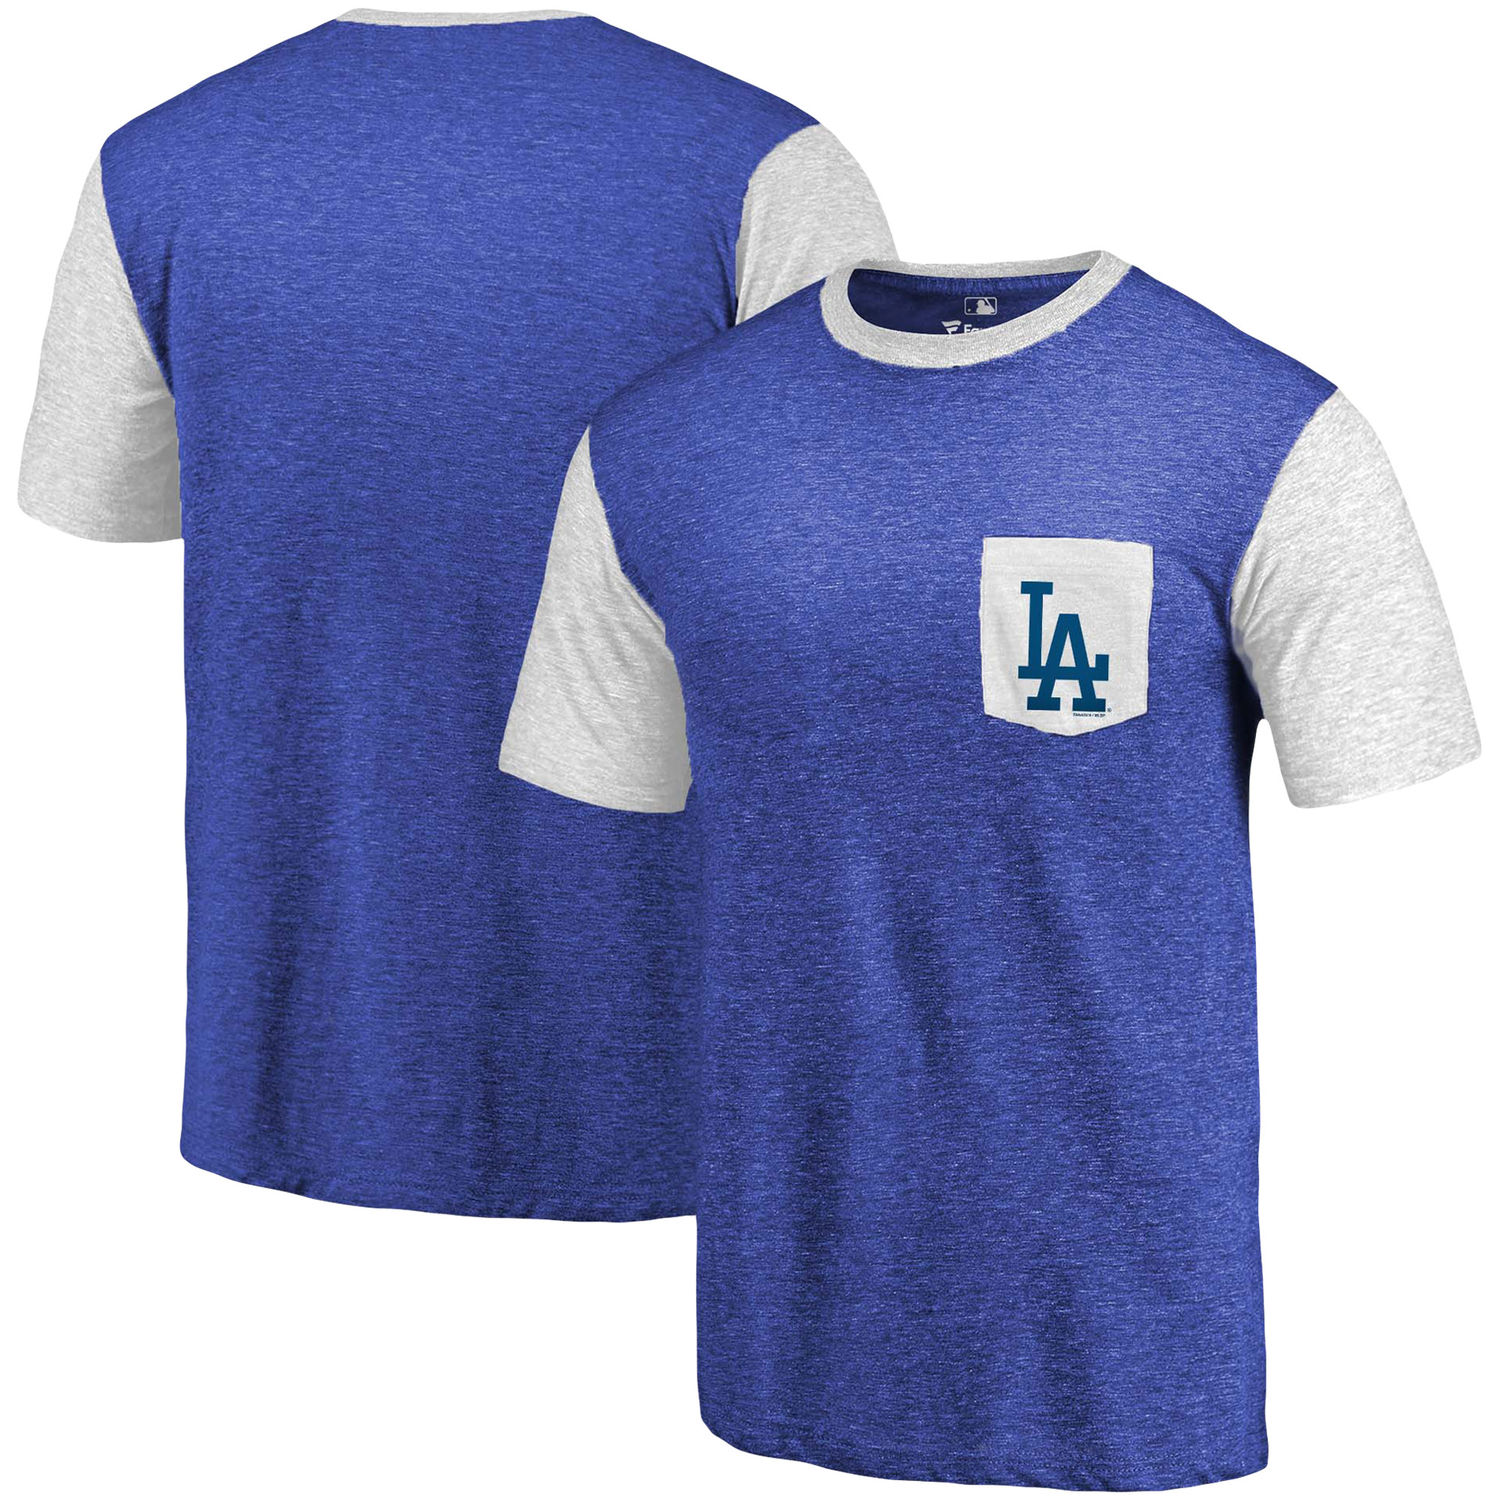 Men's Los Angeles Dodgers Fanatics Branded Royal/White Refresh Pocket T-Shirt - Click Image to Close